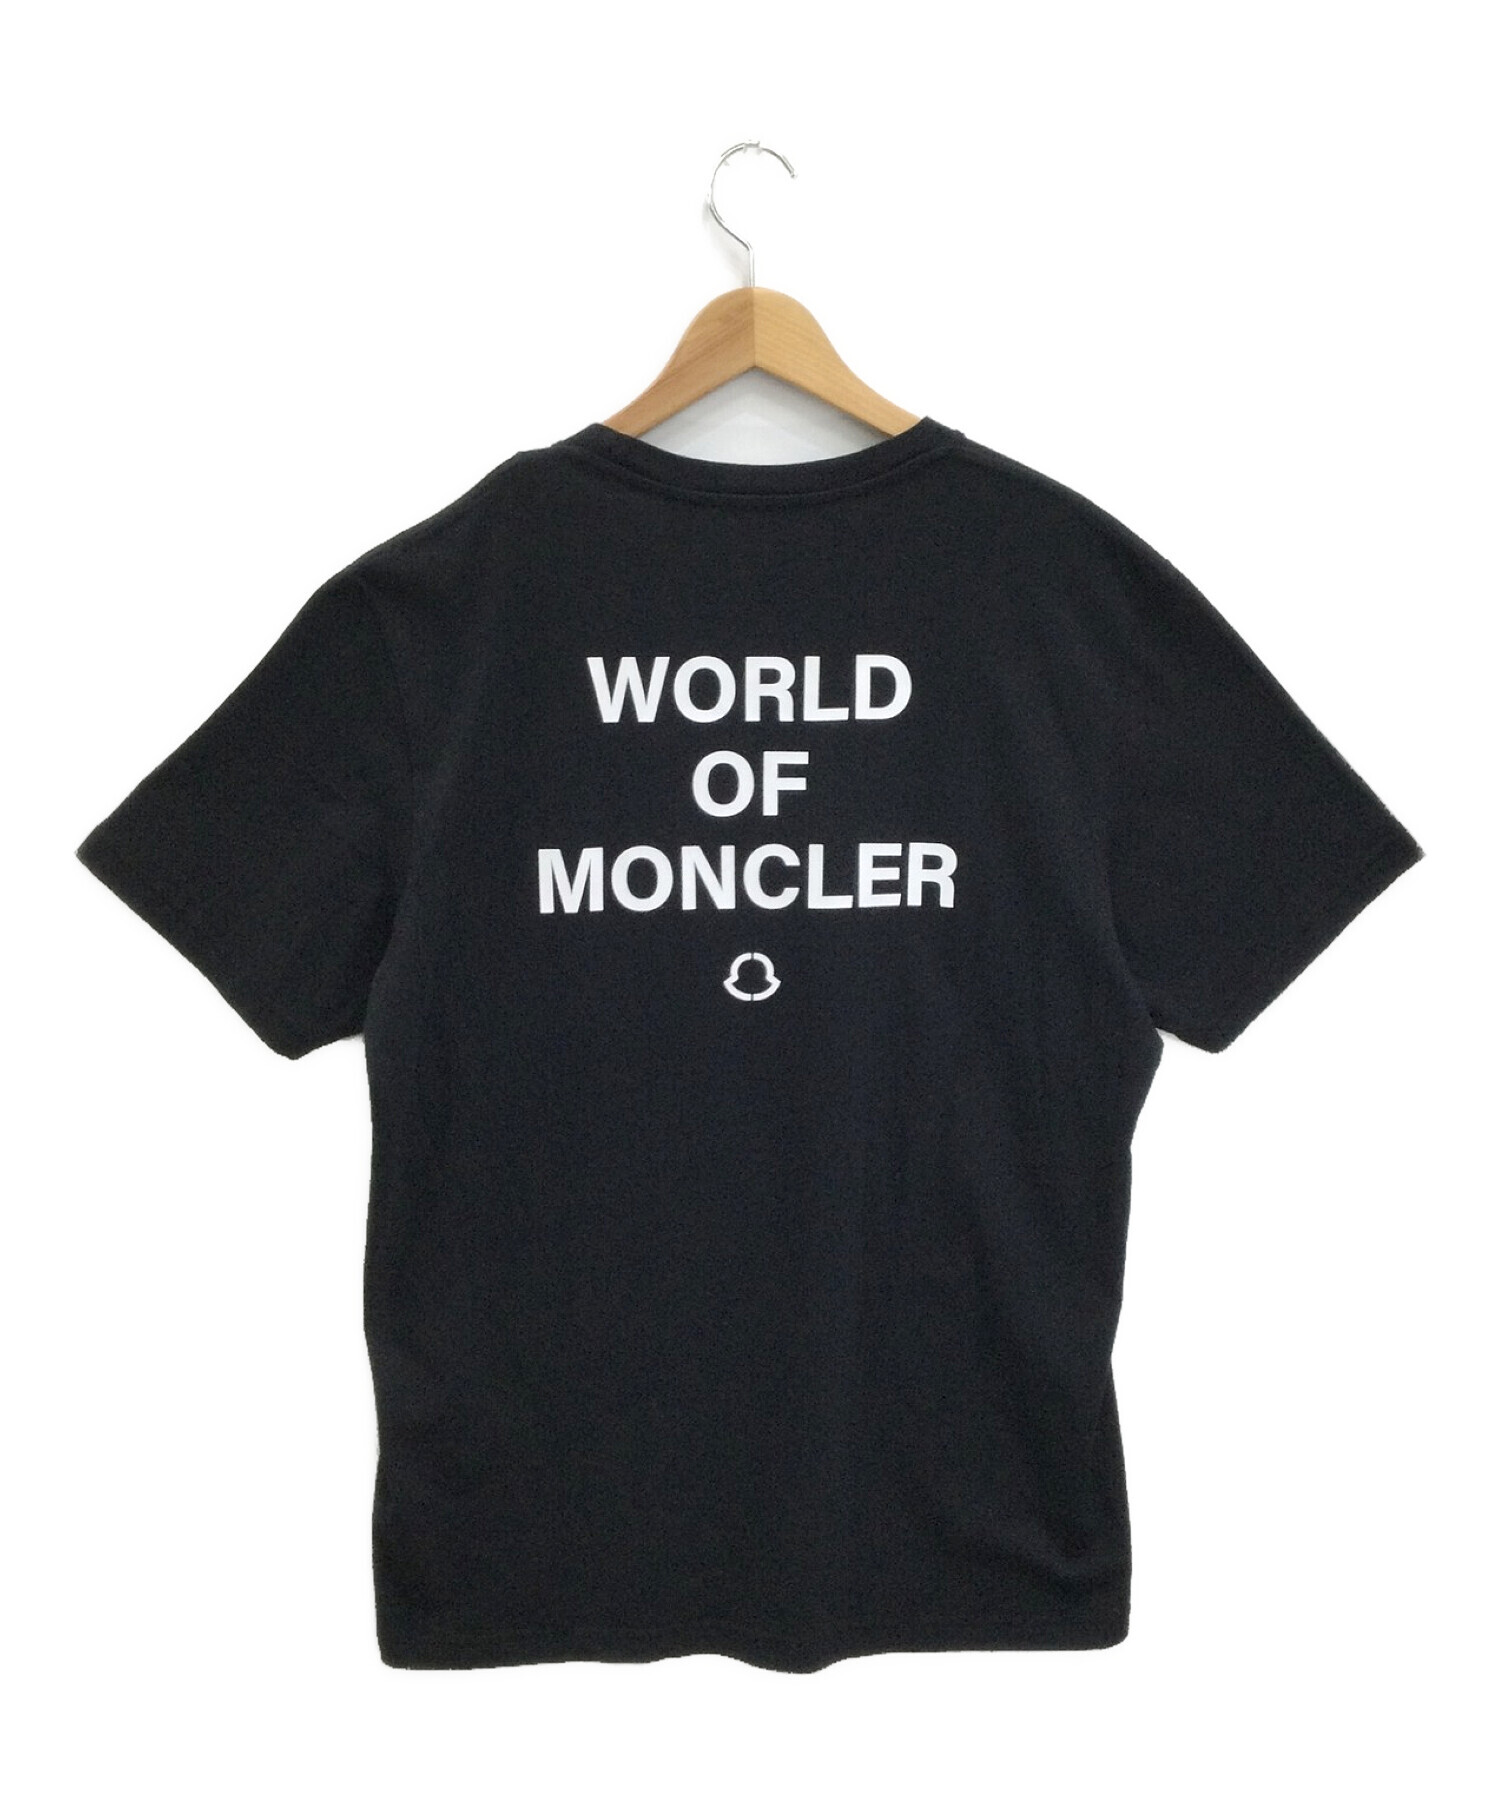 MONCLER (モンクレール) 7 MONCLER Genius Fragment WOM/Tee ブラック サイズ:M